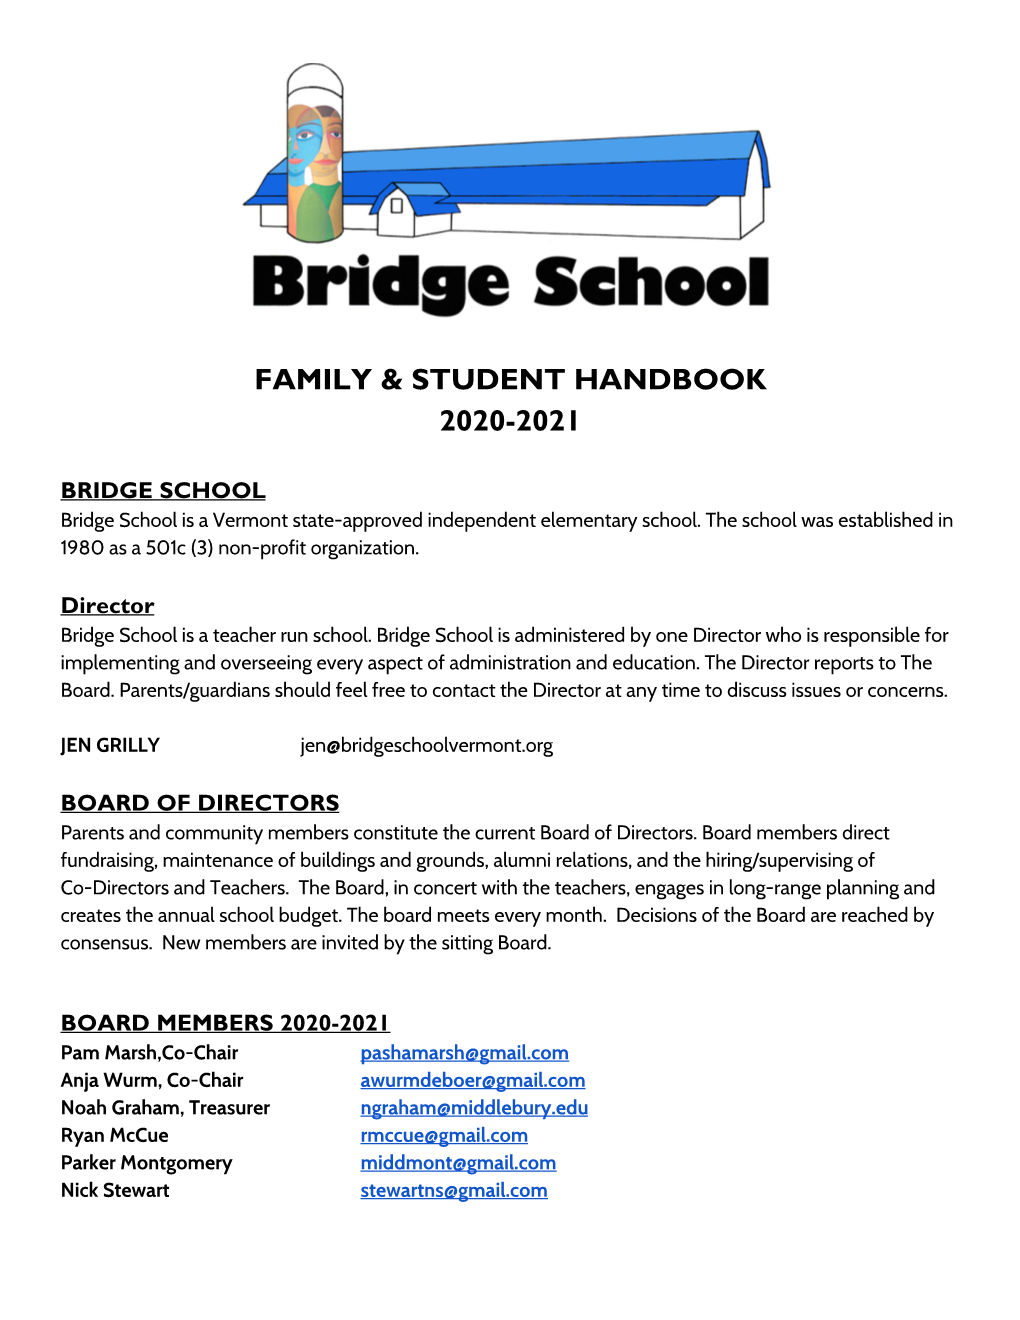 Family & Student Handbook 2020-2021